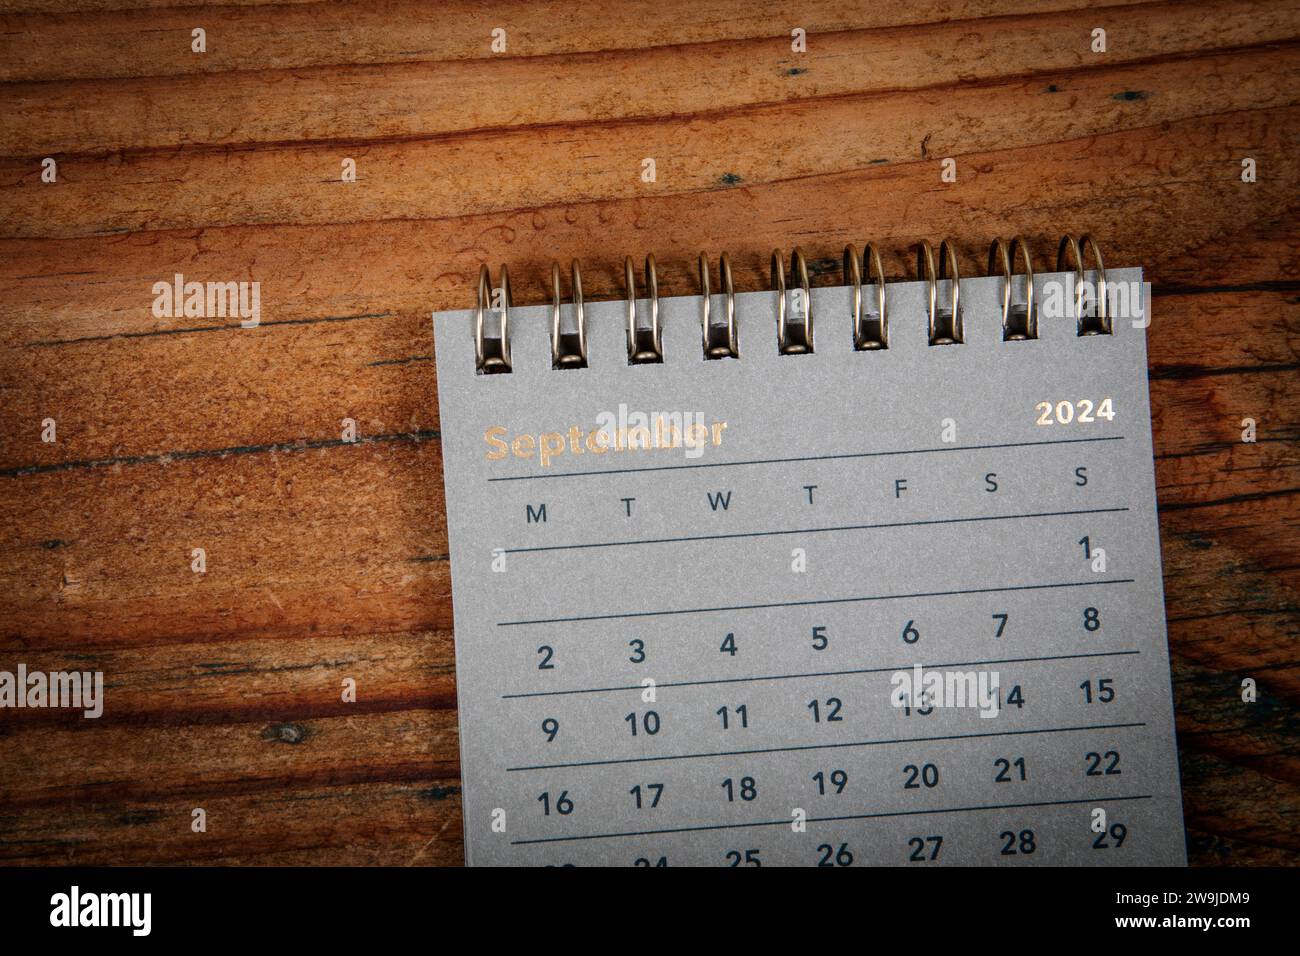 SEPTEMBER. Green cardboard calendar on a wooden texture background. Stock Photo